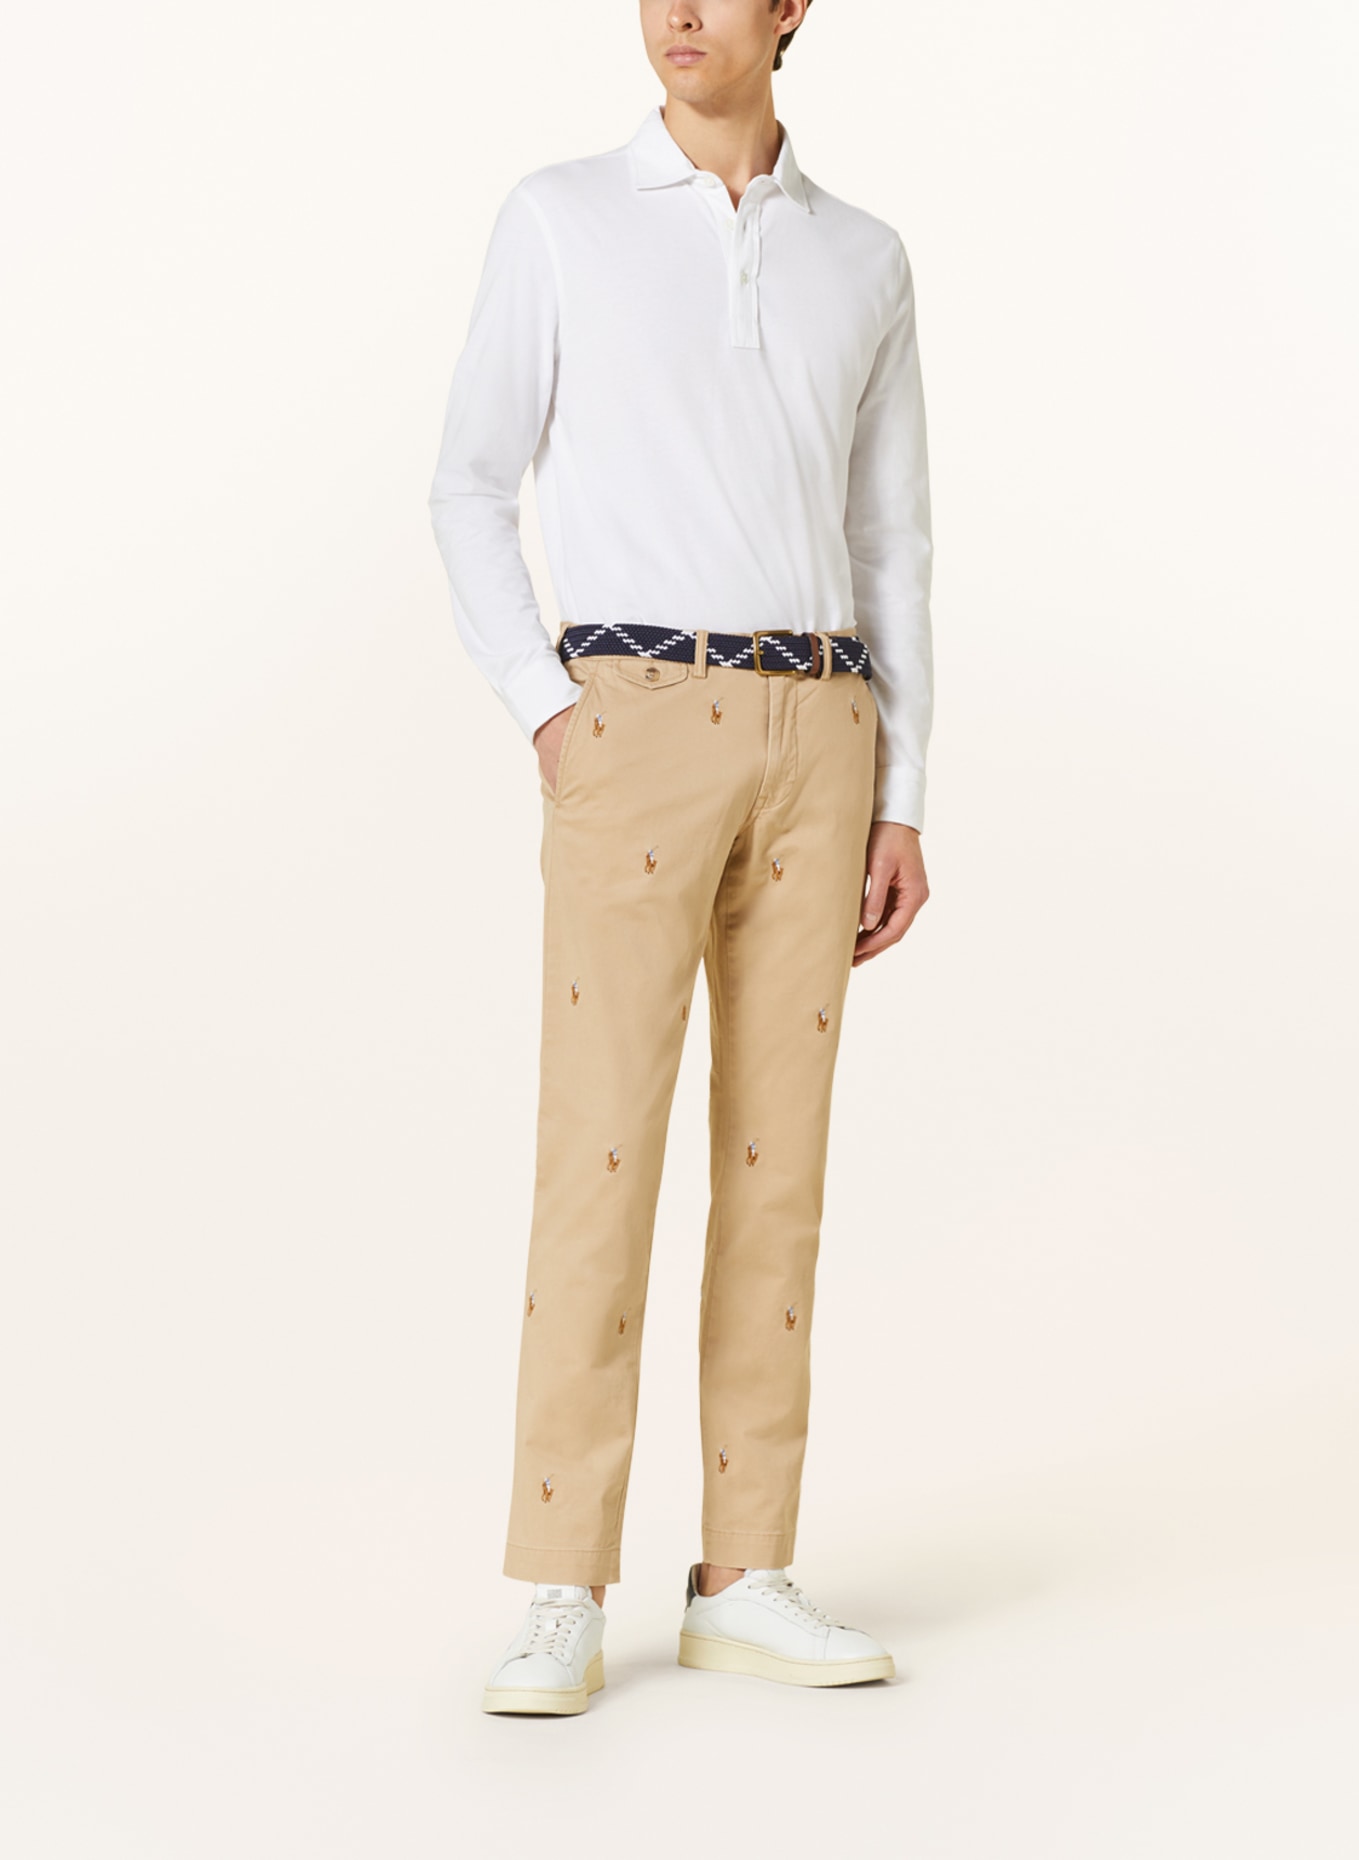 POLO RALPH LAUREN Jersey polo shirt custom slim fit, Color: WHITE (Image 2)